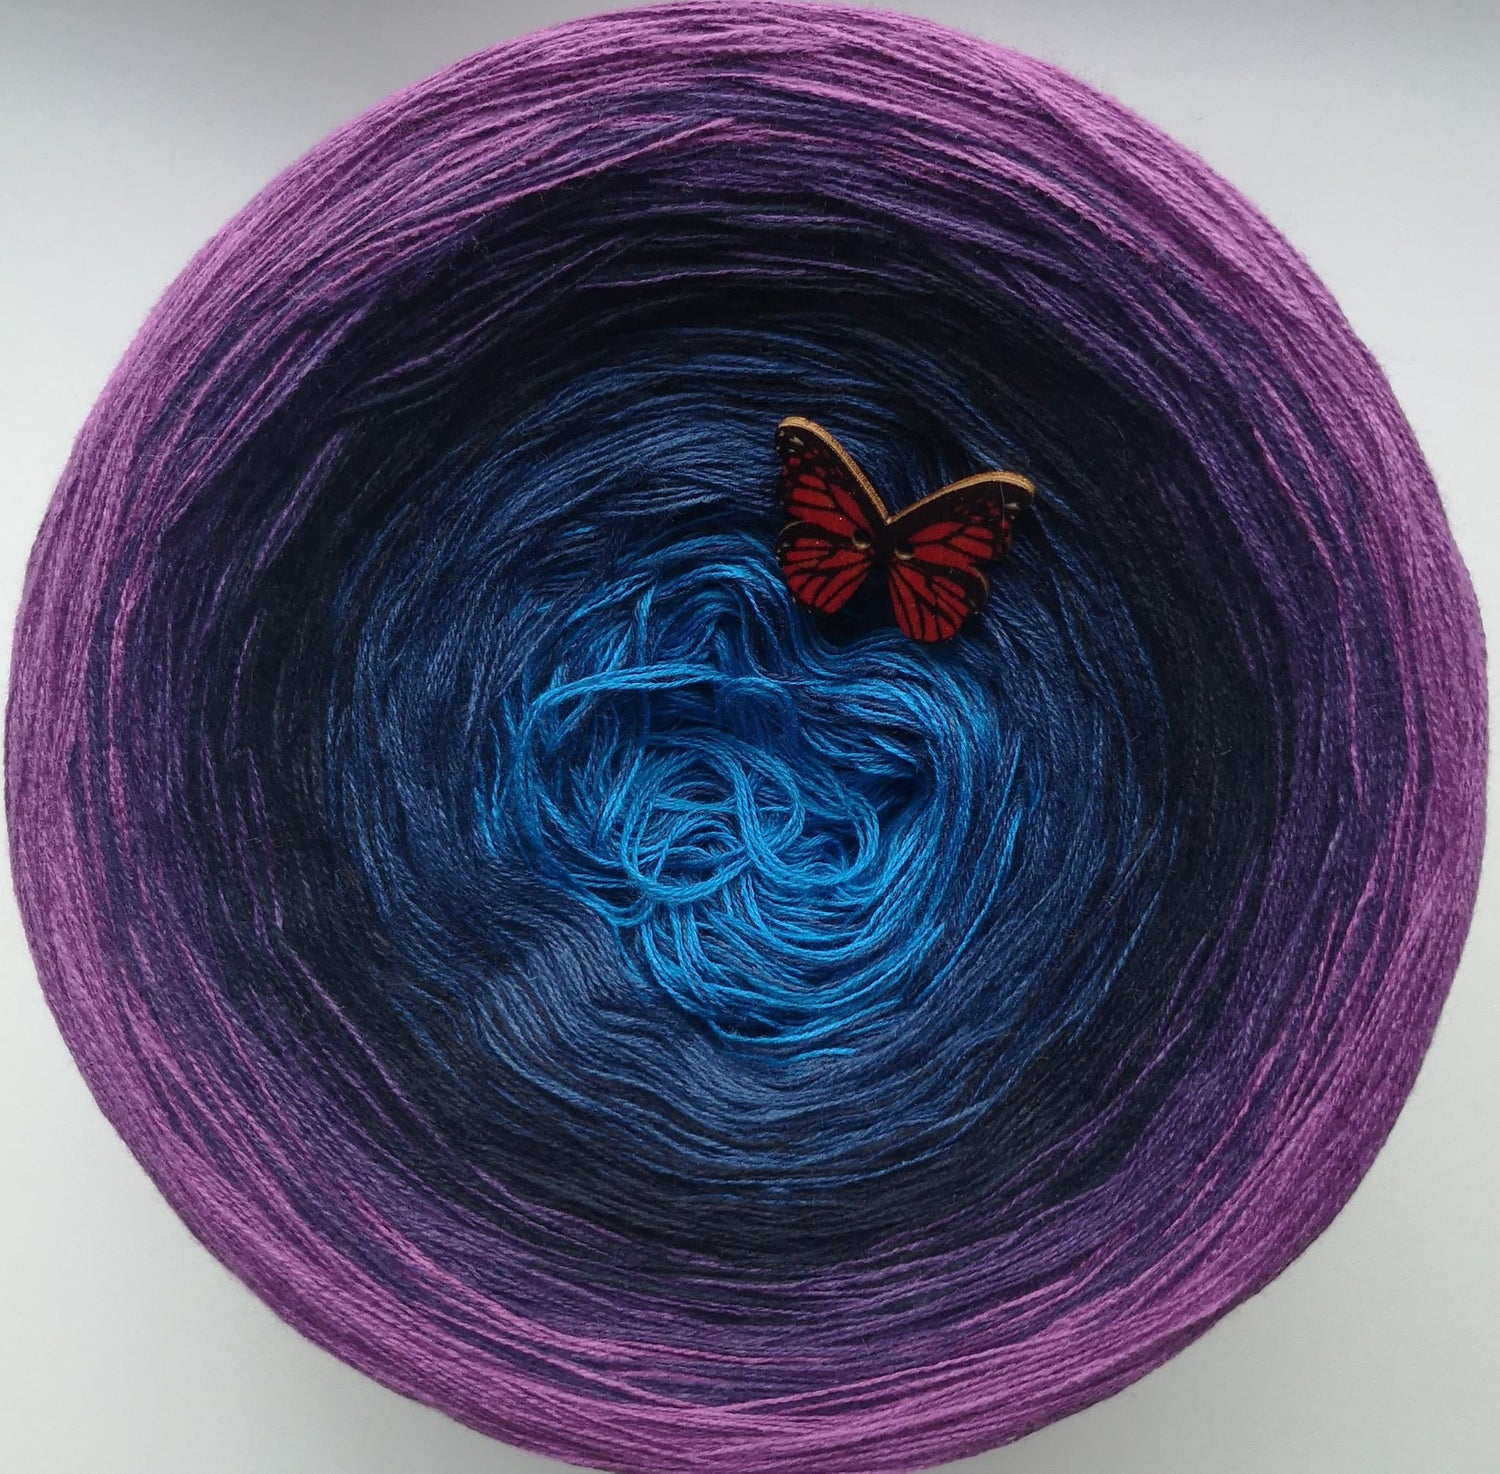 Cotton/Acryllic Ombre Yarn Cake Gradient Cake Yarn. CA158 – Agnes World  Ombre Yarn